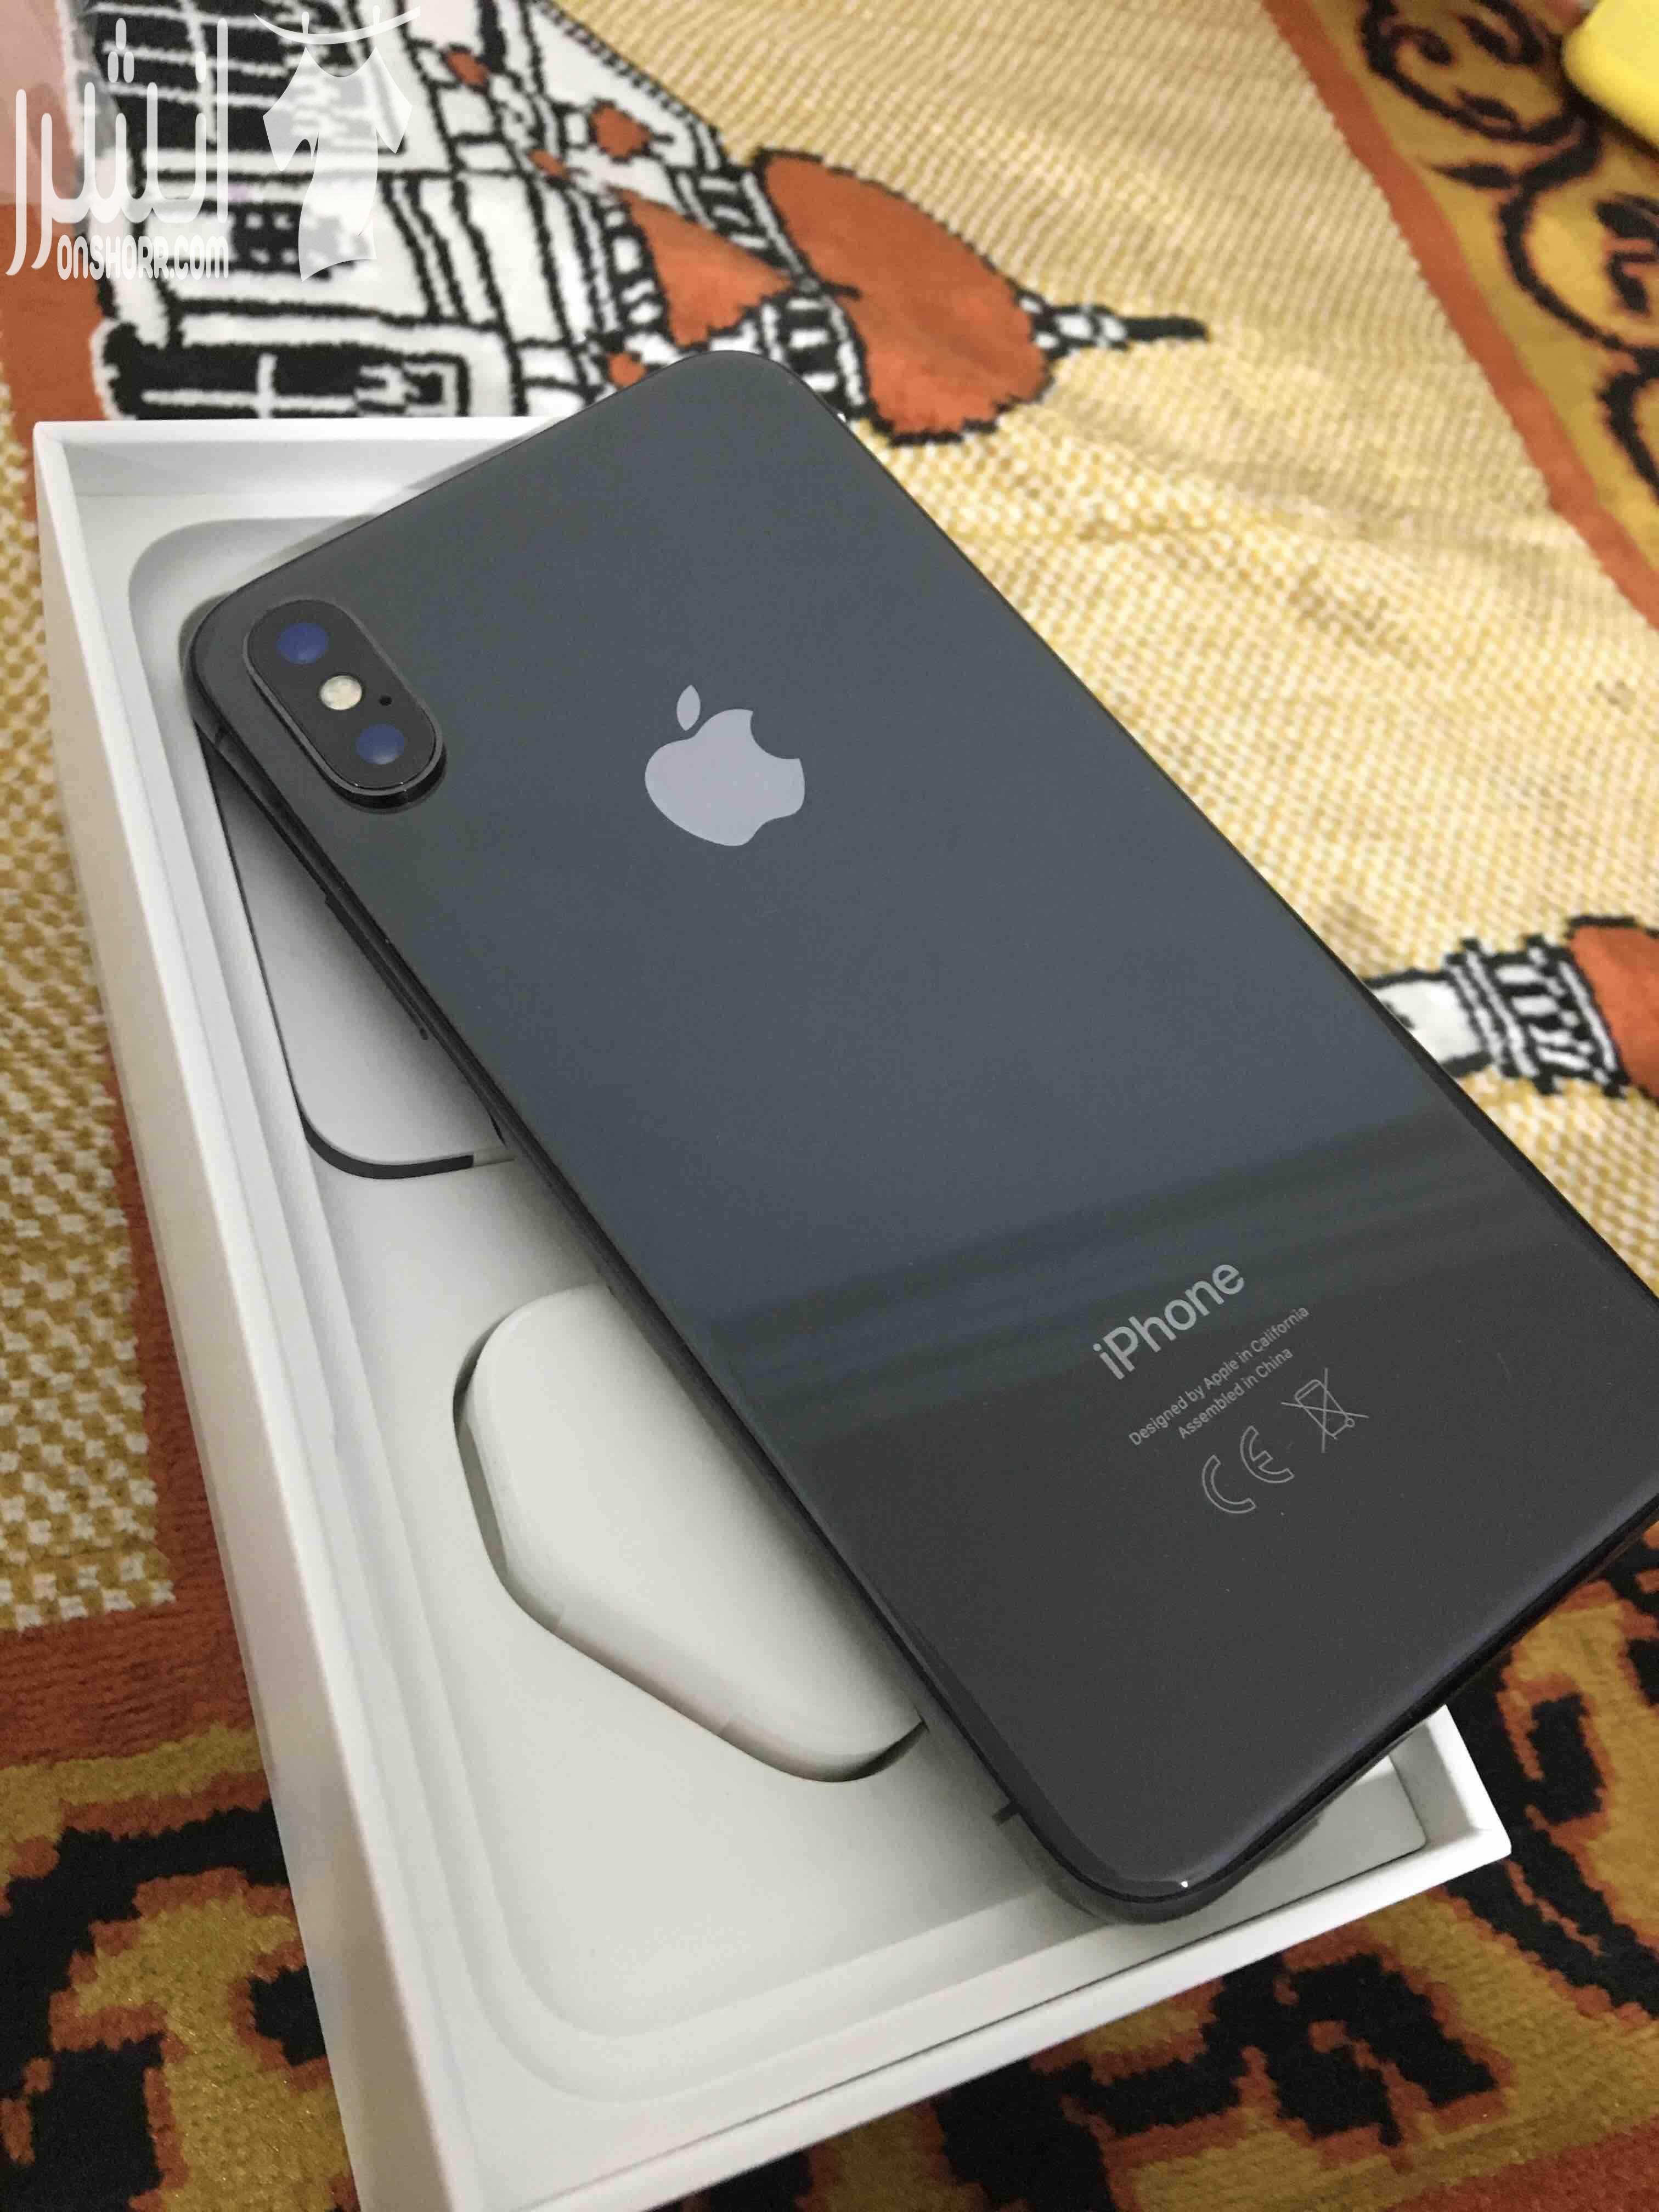 Apple iPhone 7 Plus 128GB( Free iWatch ) Free Shipping Delivery - Dhl , Fedex $350New OriginalApple iPhone 7+ Plus 128GB GSM Unlocked,Sim-Free warranty - Apple -  iPhone X 256GB black...